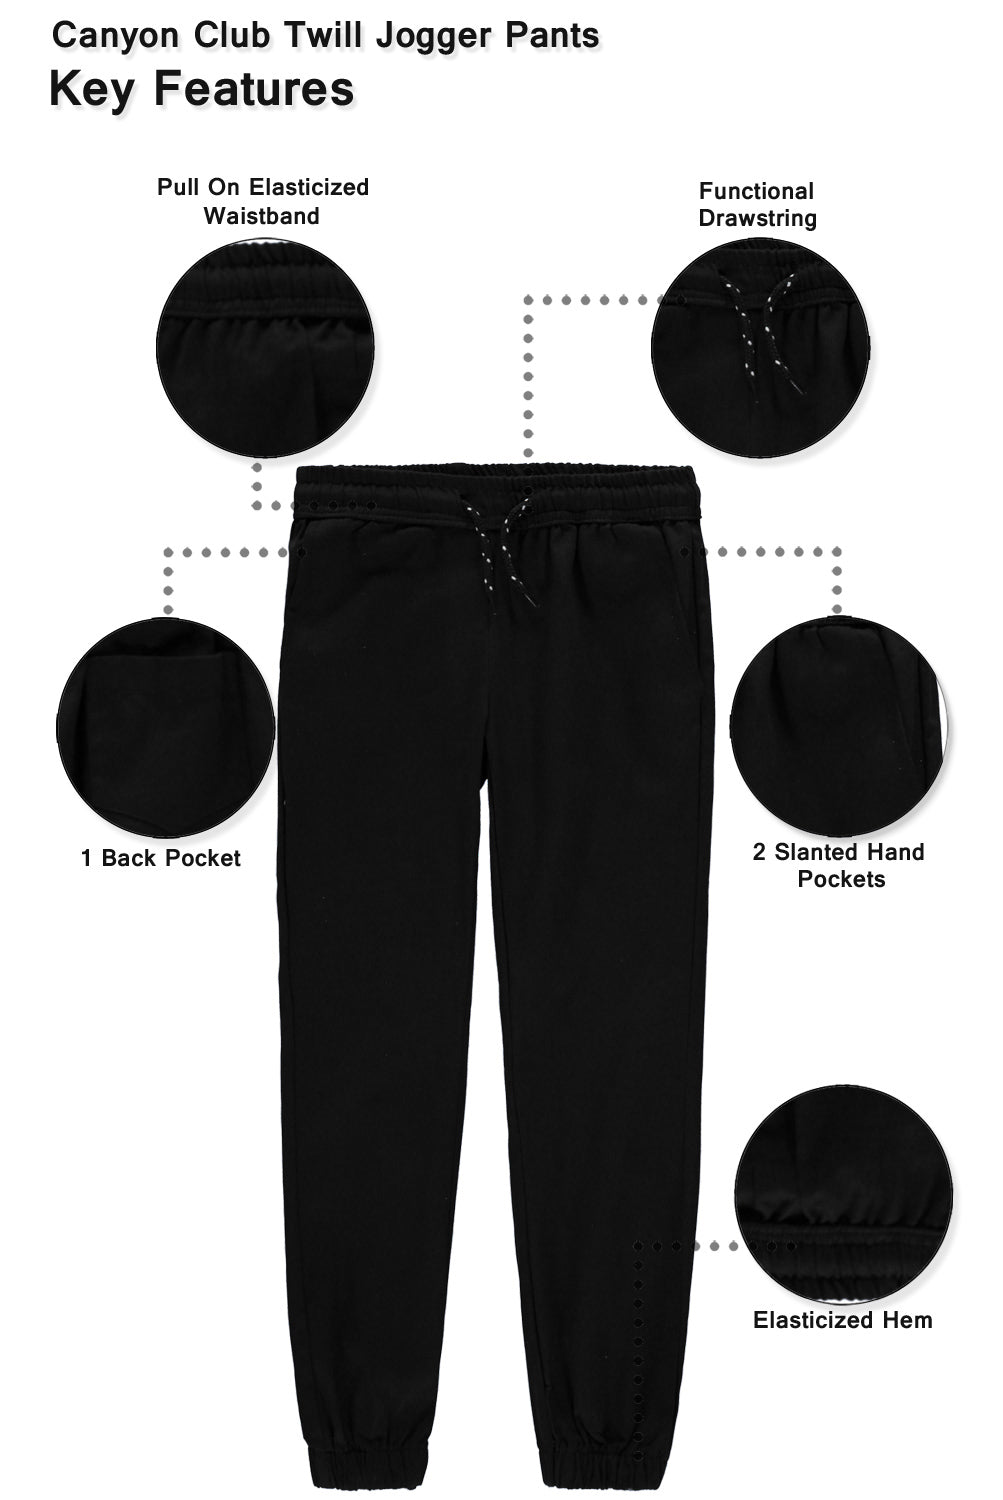 Drawstring sweatpants with Elastic Ankles slant pocket